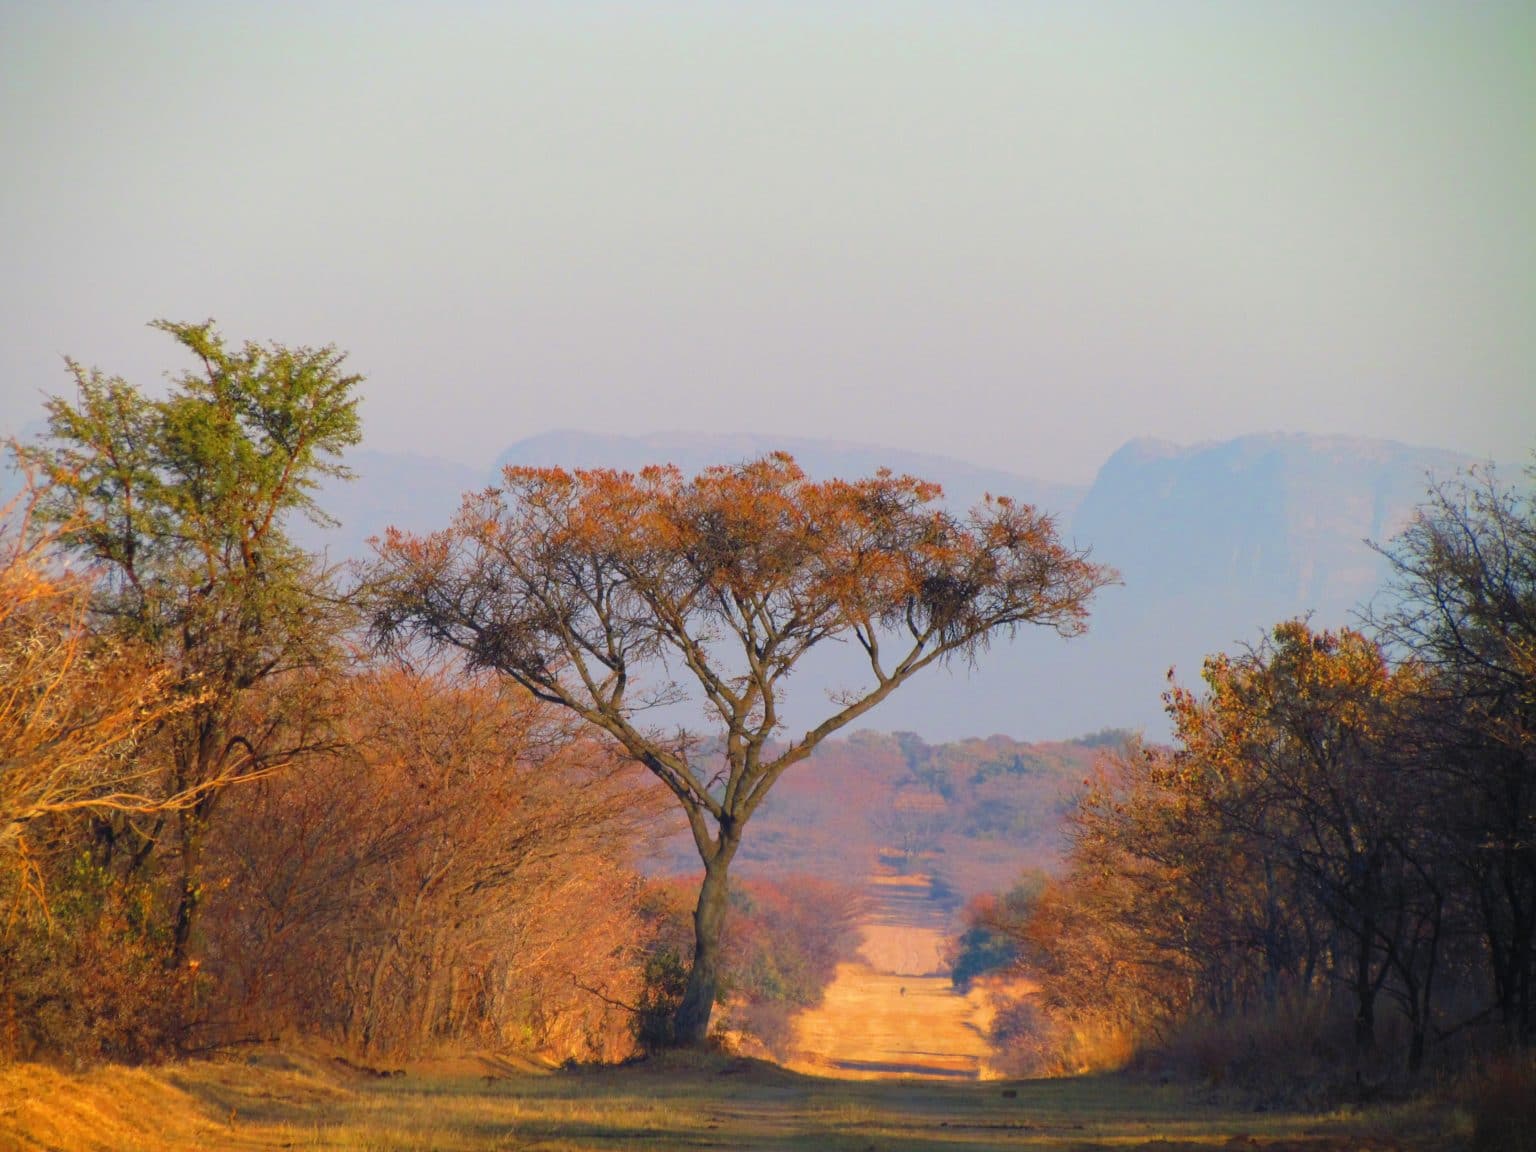 South Africa's landscape